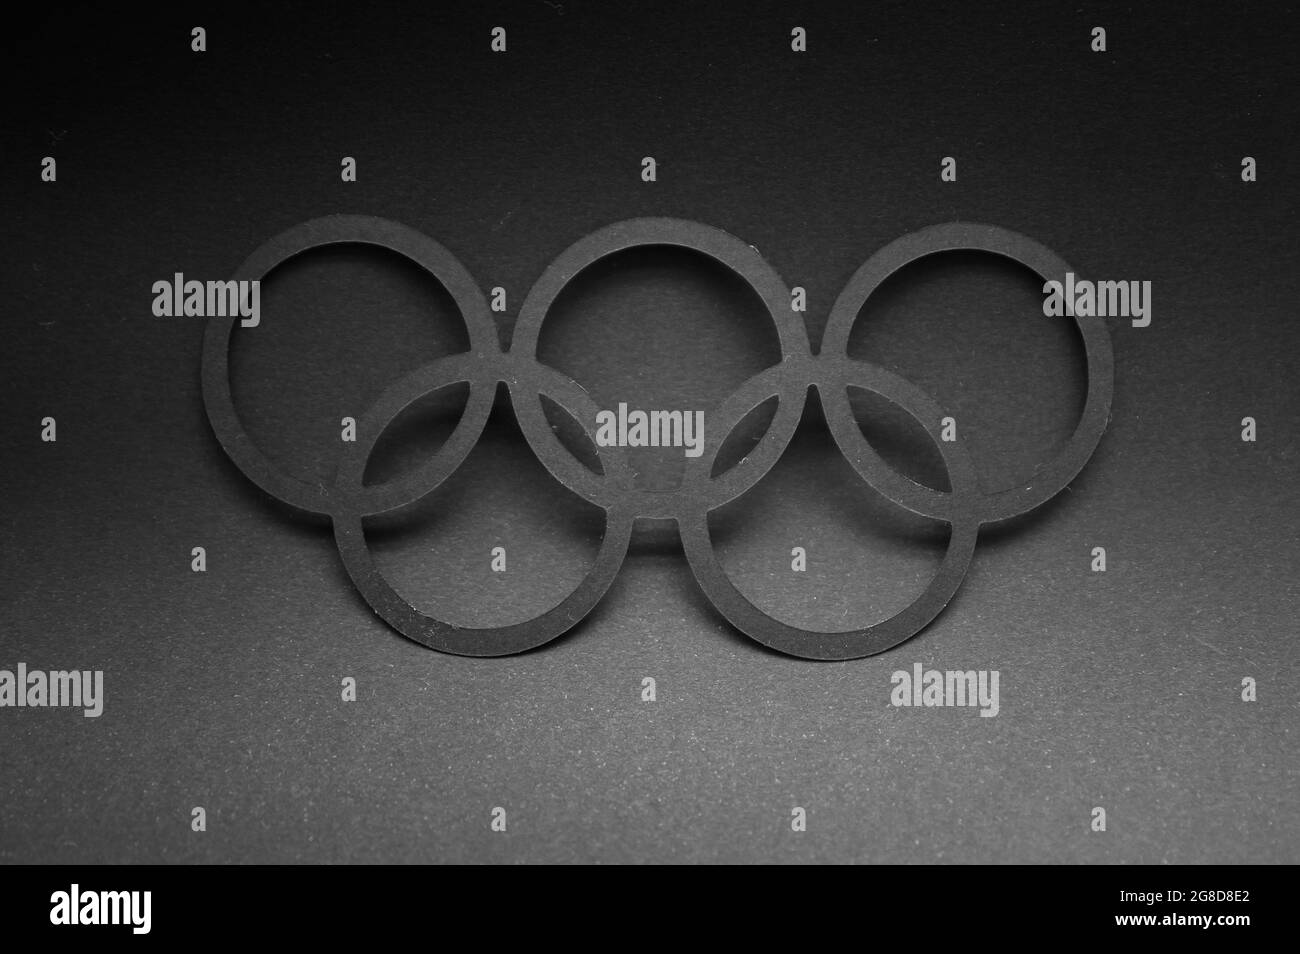 olympic games logo wallpaper